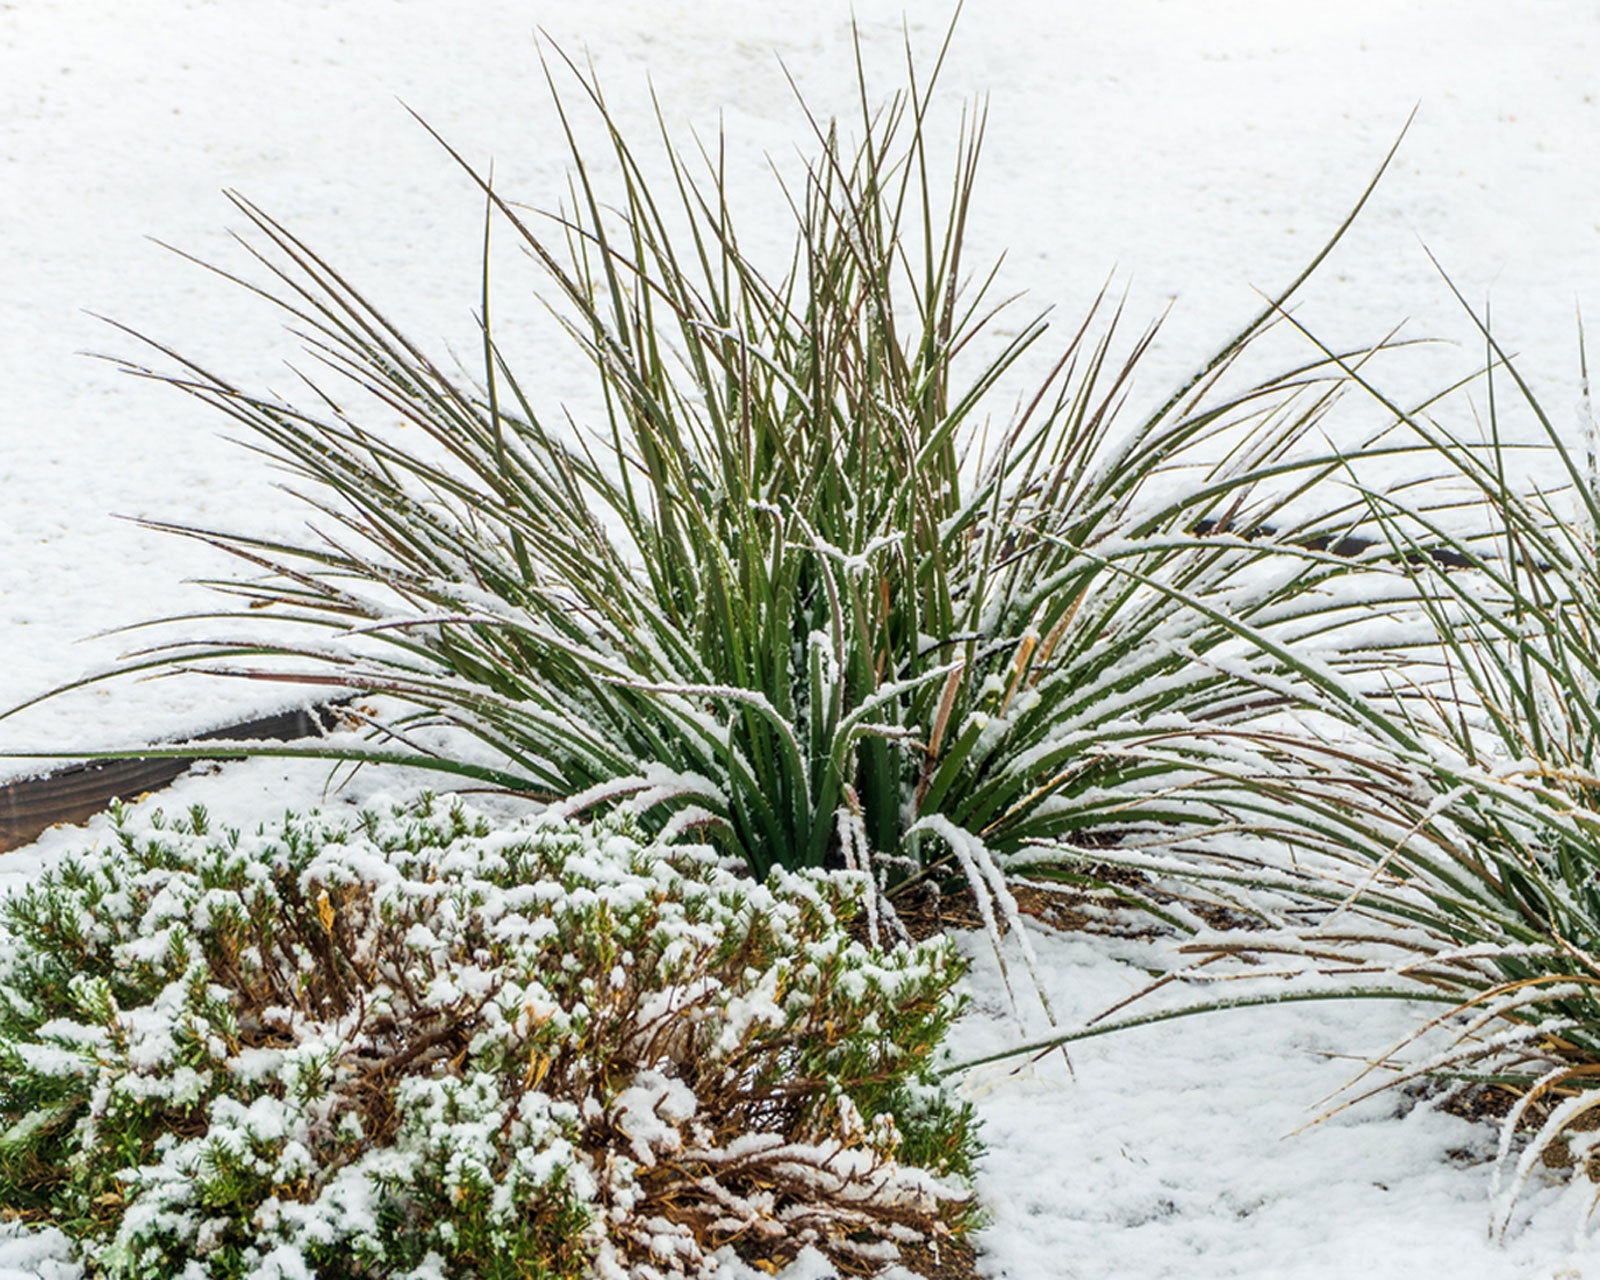 Design a Winter Garden that Combines Toughness, Color & Texture - Gallery